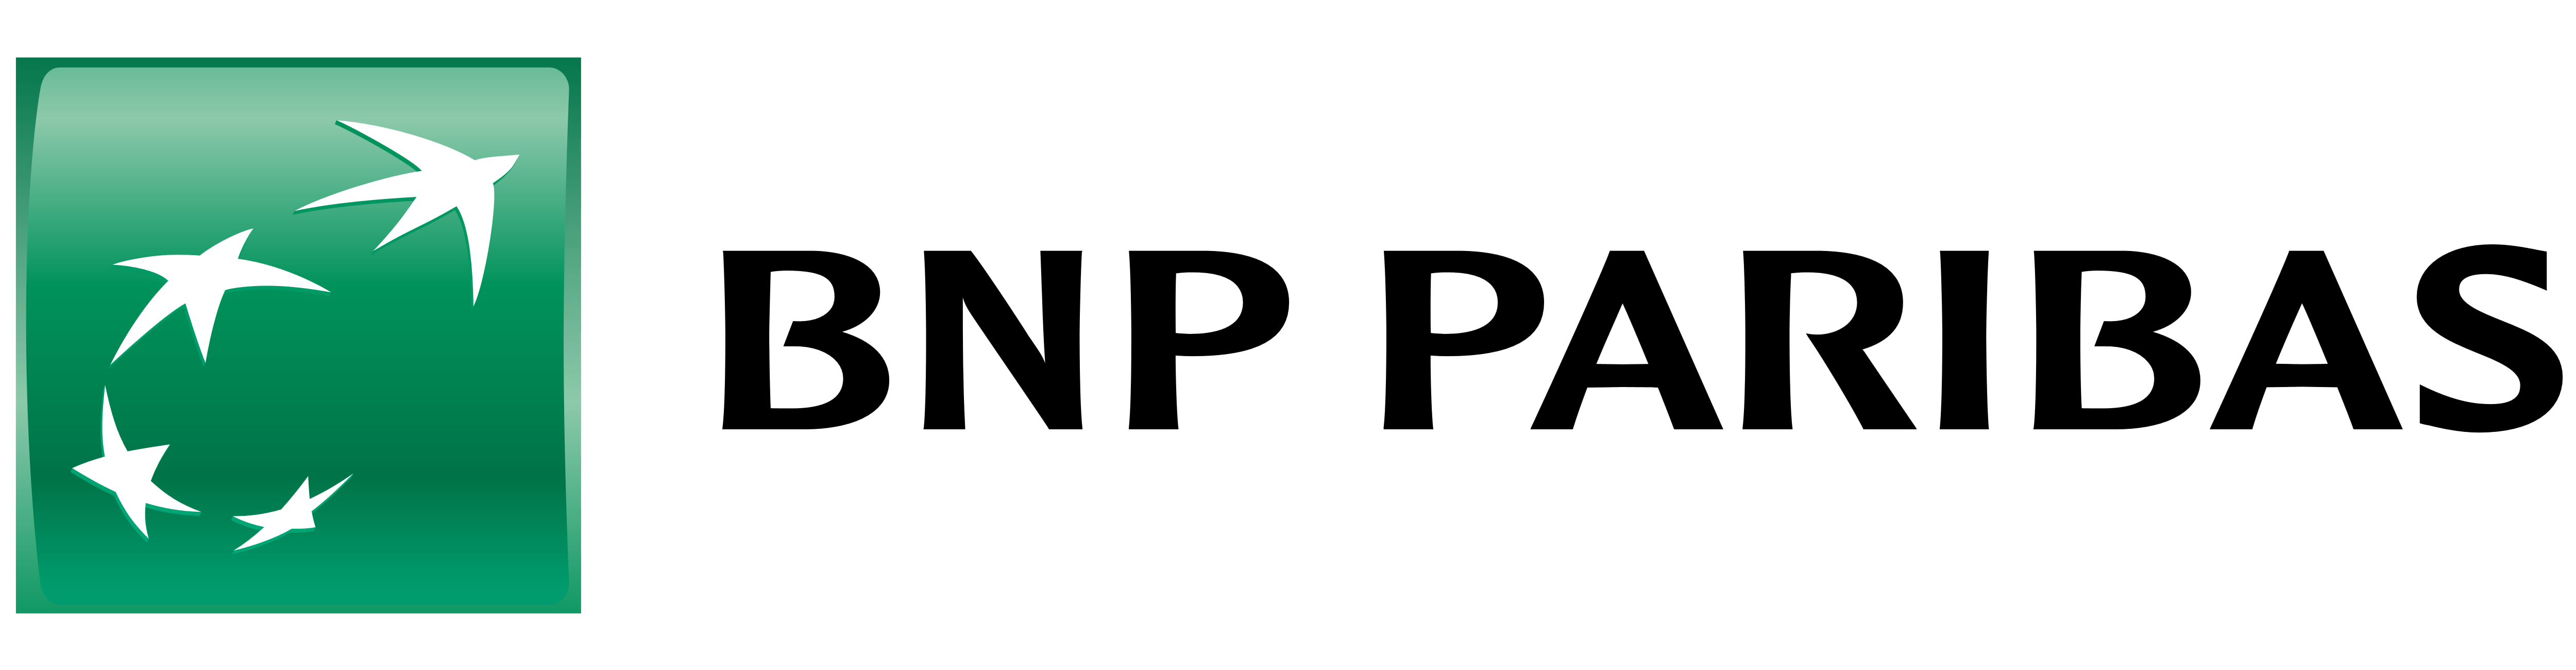 BNP Logo - BNP Paribas – Logos Download